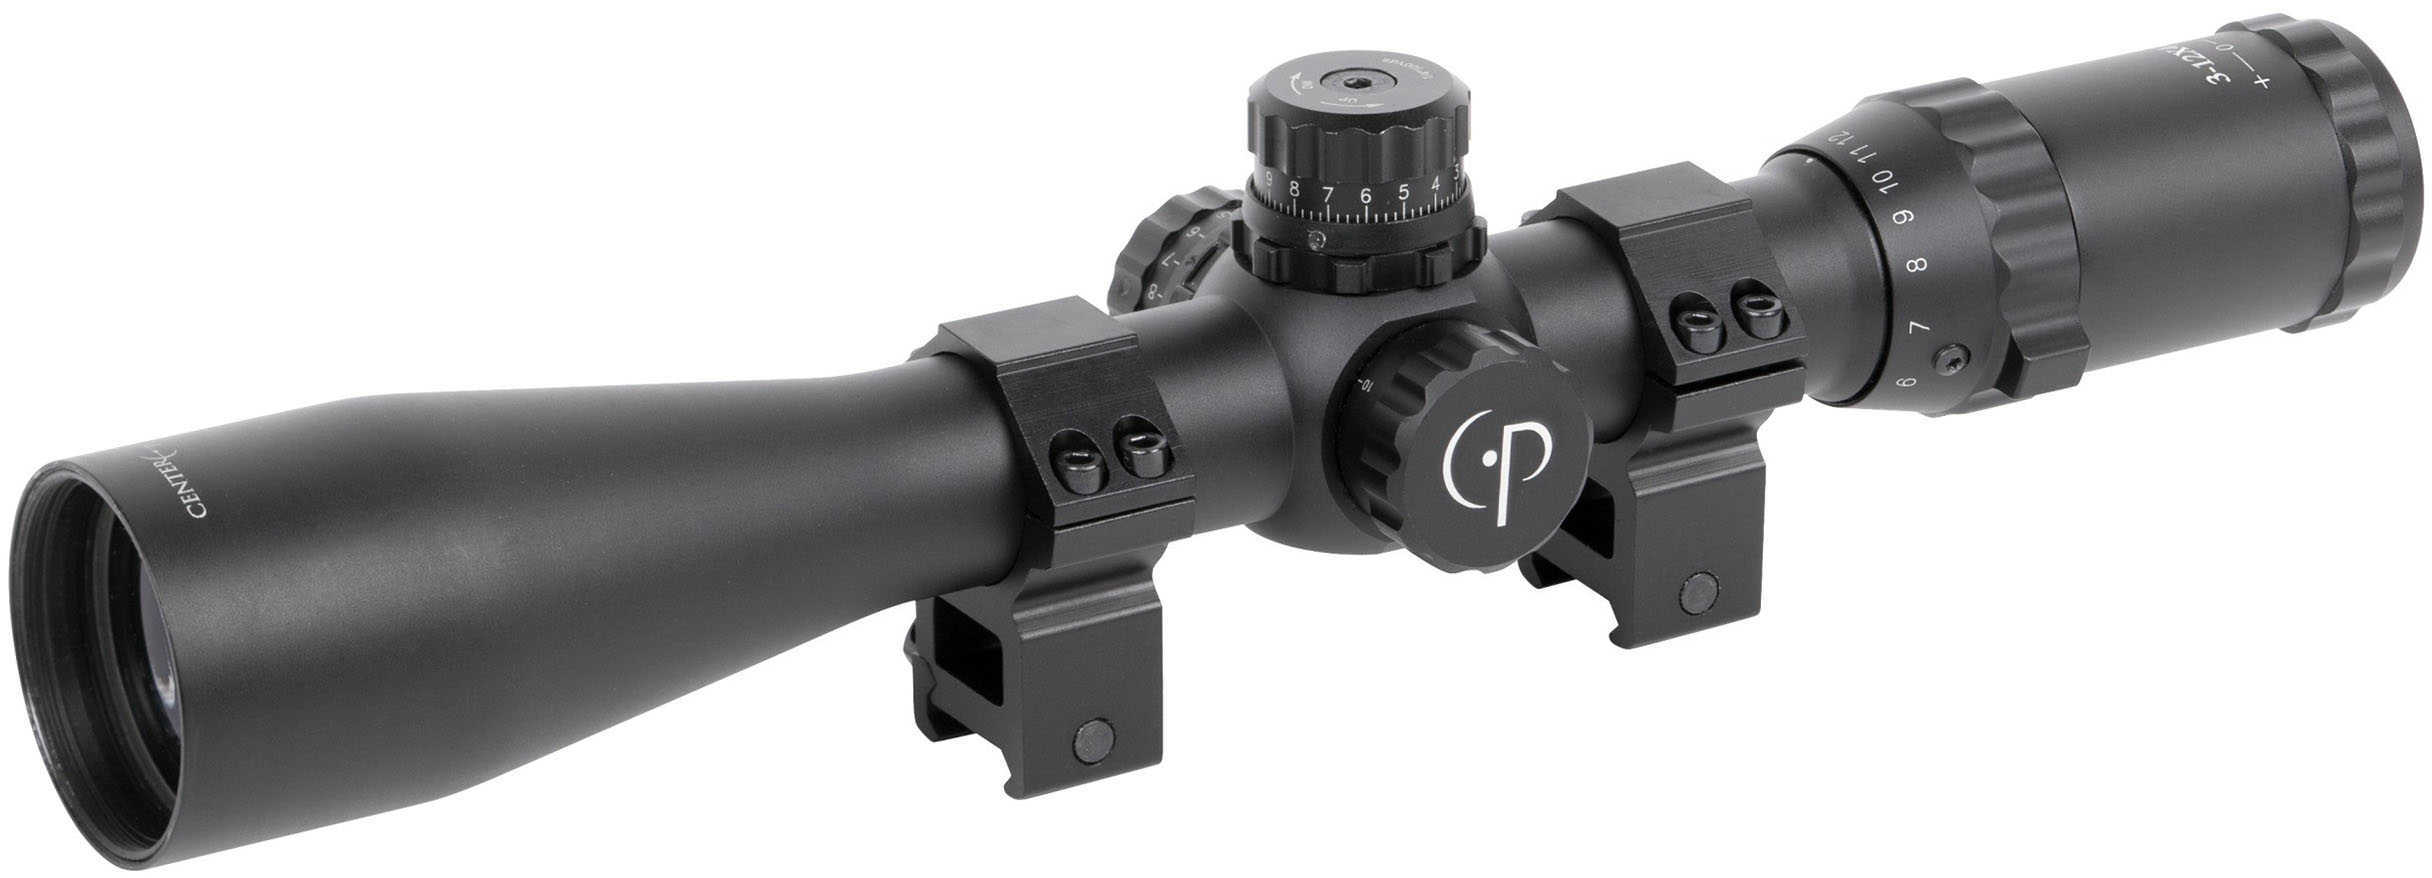 Crosman PLT Riflescope 3-9x40mm, Long Range, Black